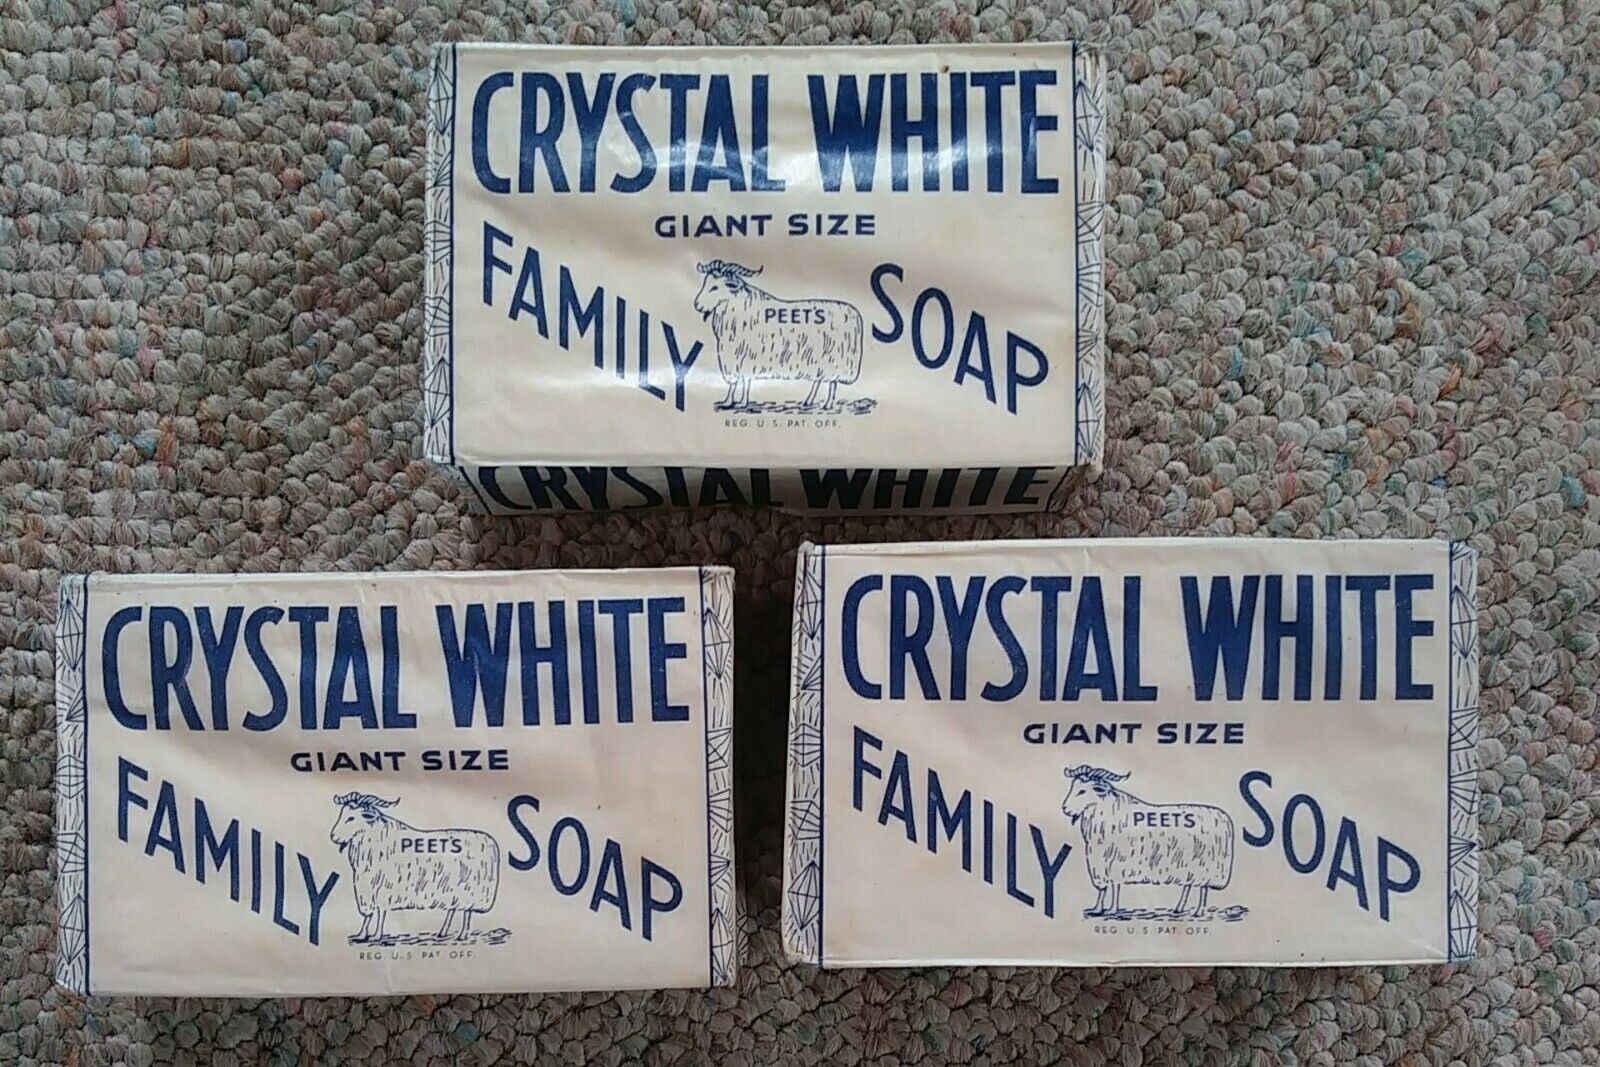 3 VINTAGE PEET'S CRYSTAL WHITE GIANT SIZE FAMILY SOAP BARS - ANTIQUE - 1940'S